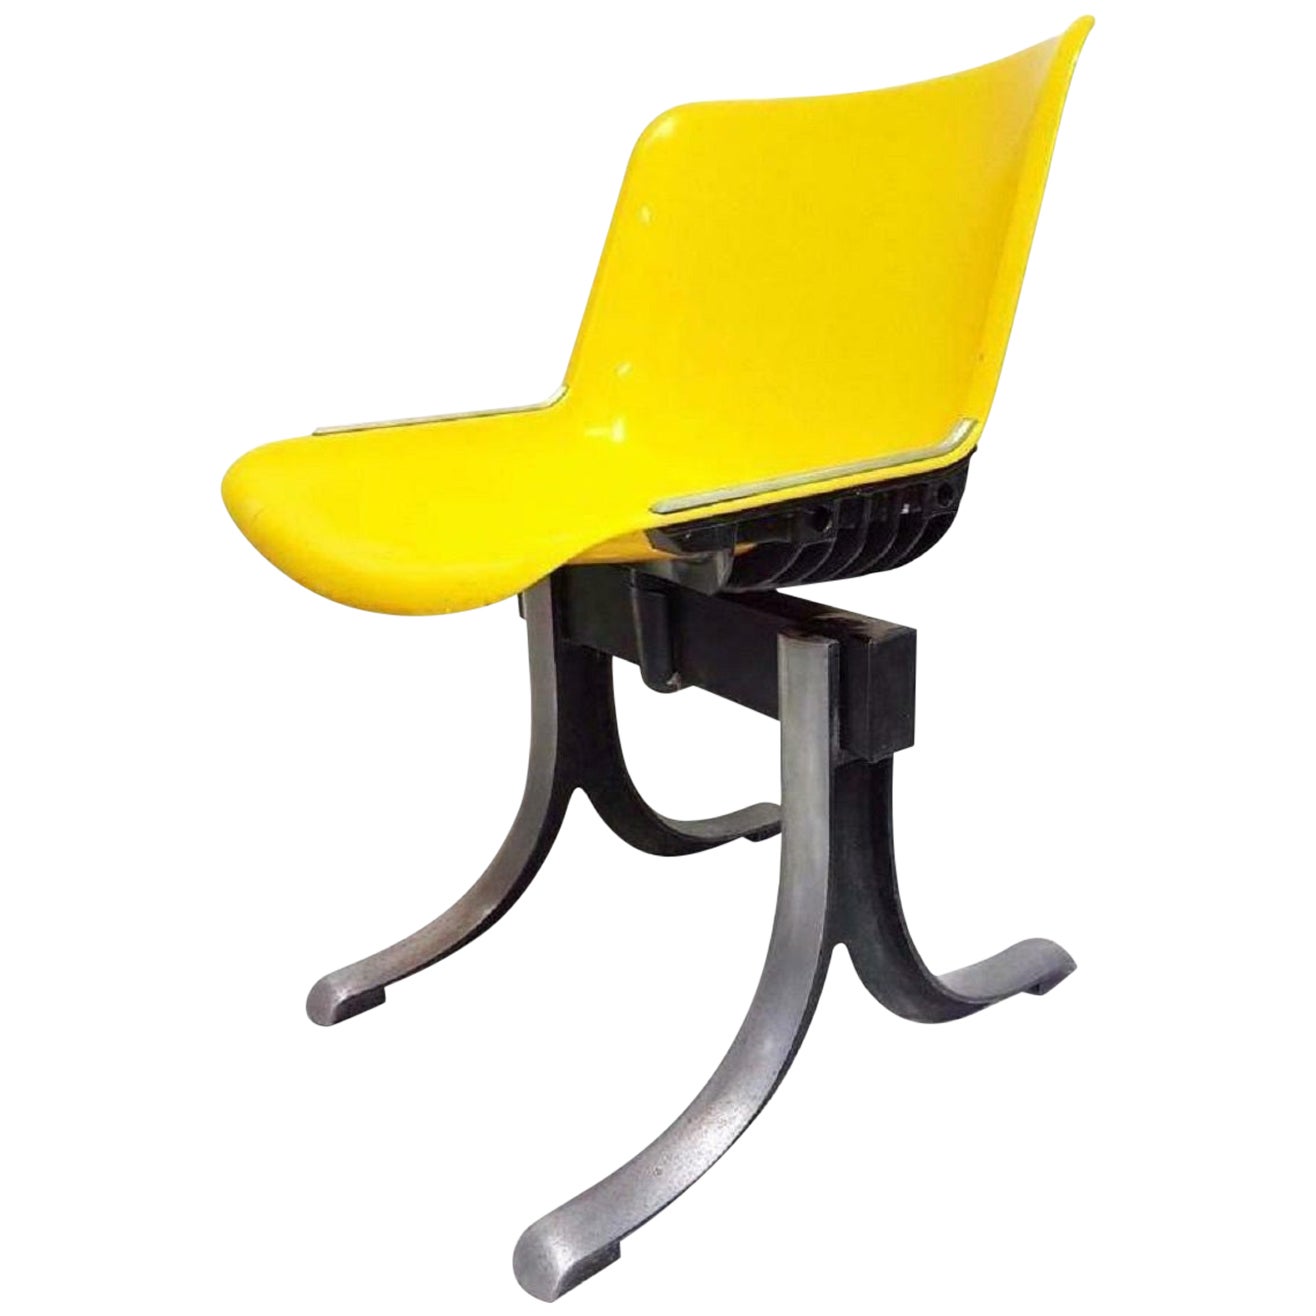 Stuhl ""Modus"" Tecno Design Ovaldo Borsani Eugenio Gerli, 1970er Jahre, seltene Version